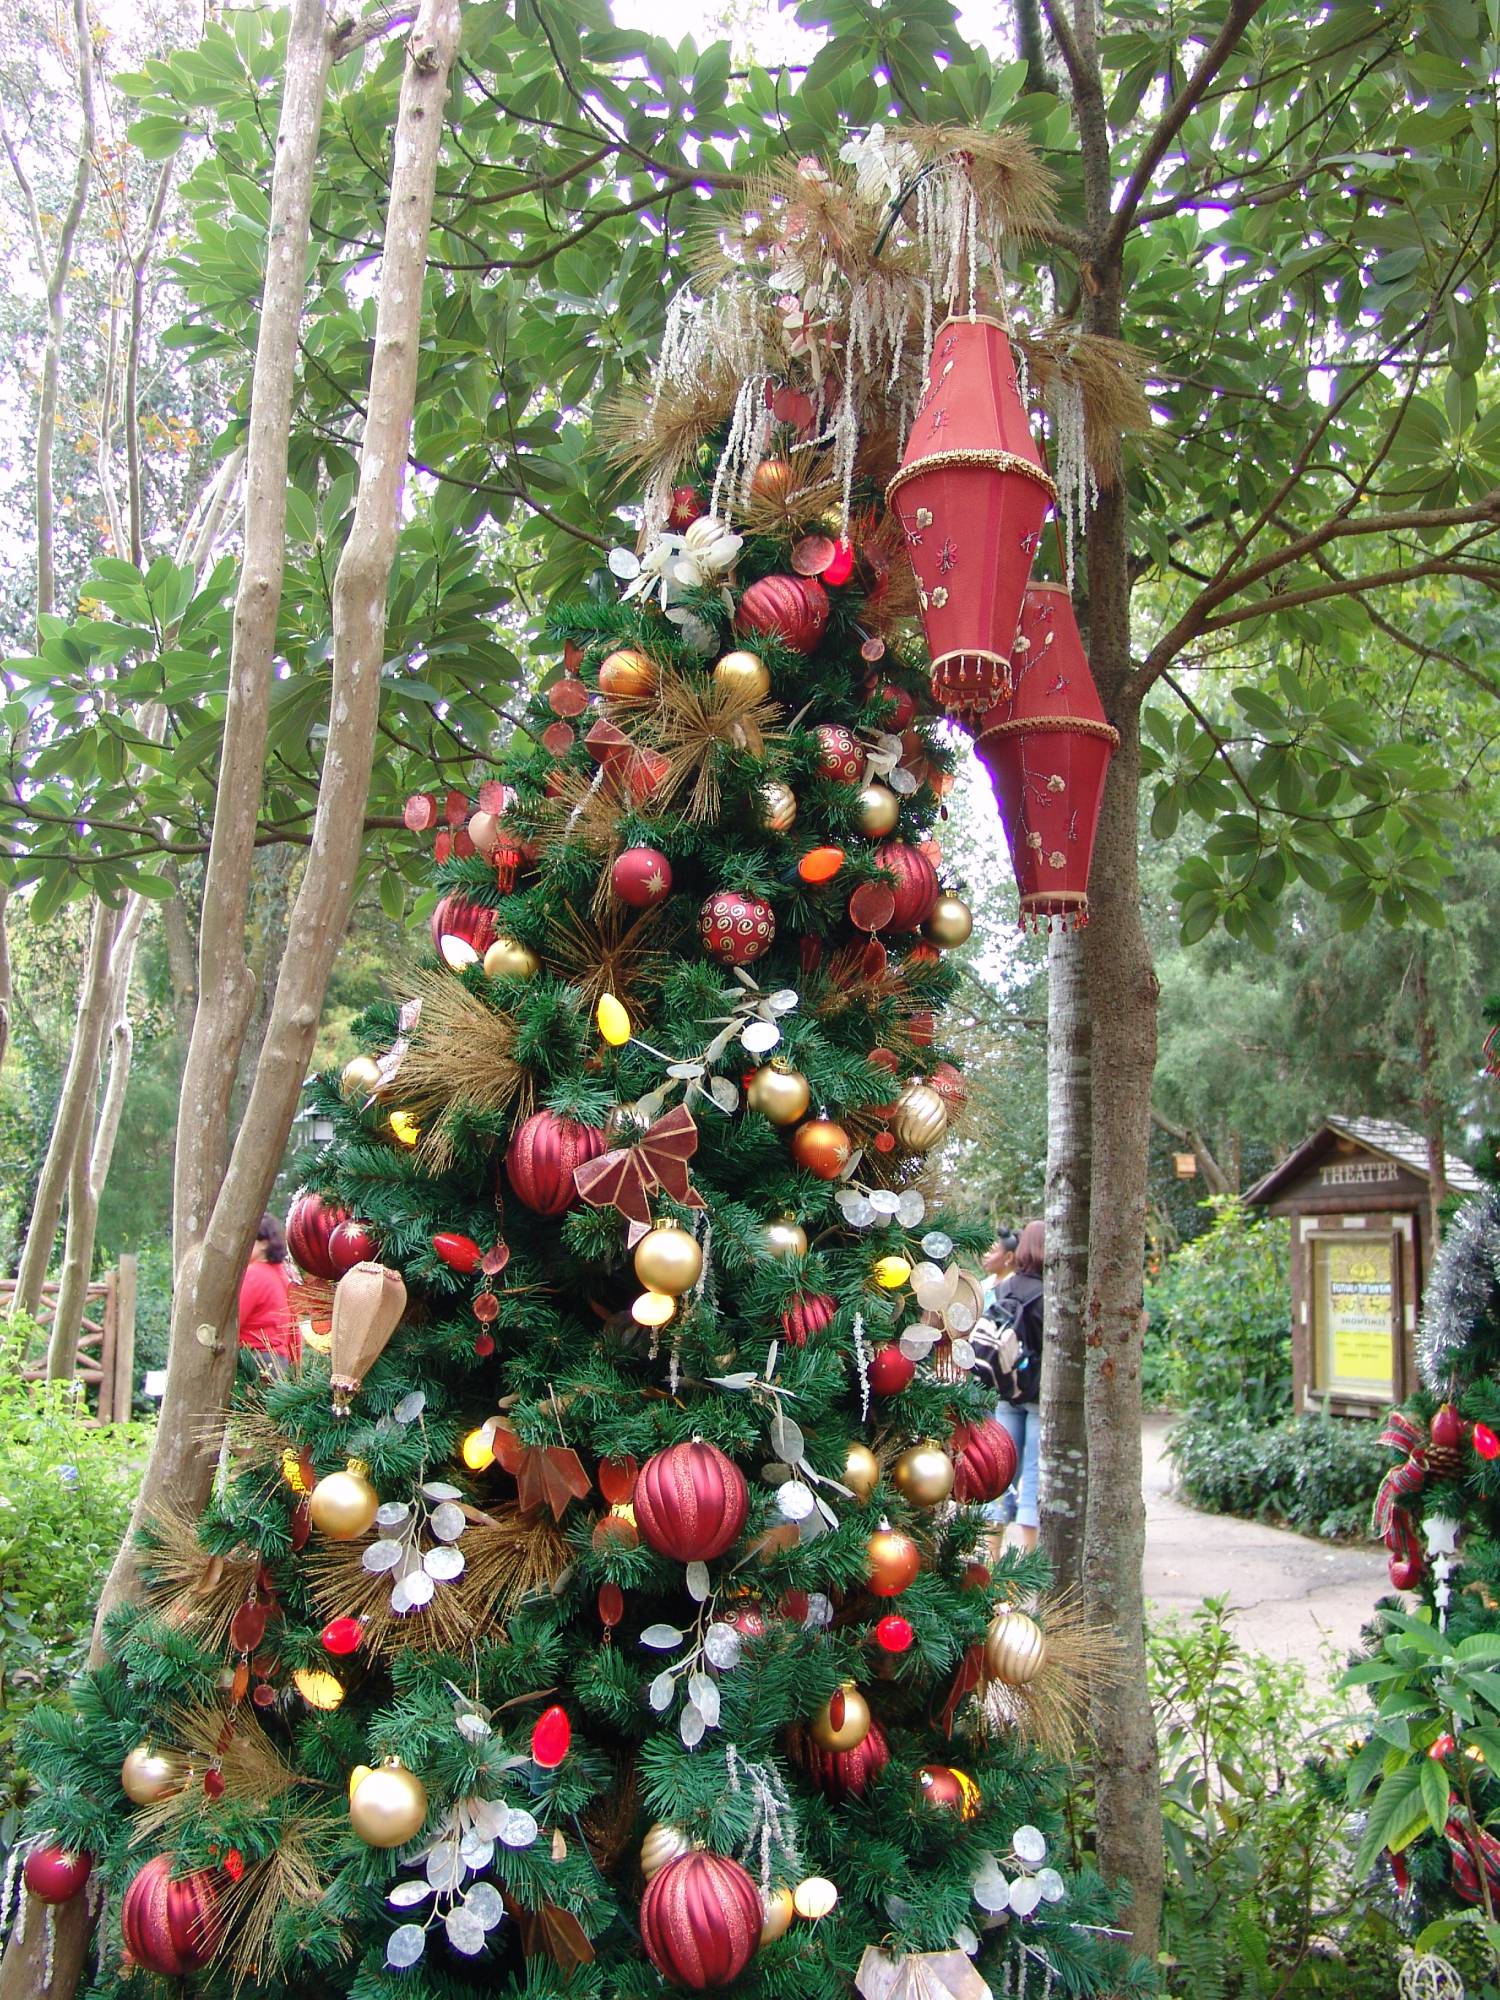 Animal Kingdom - Camp Minnie Mickey Christmas trees